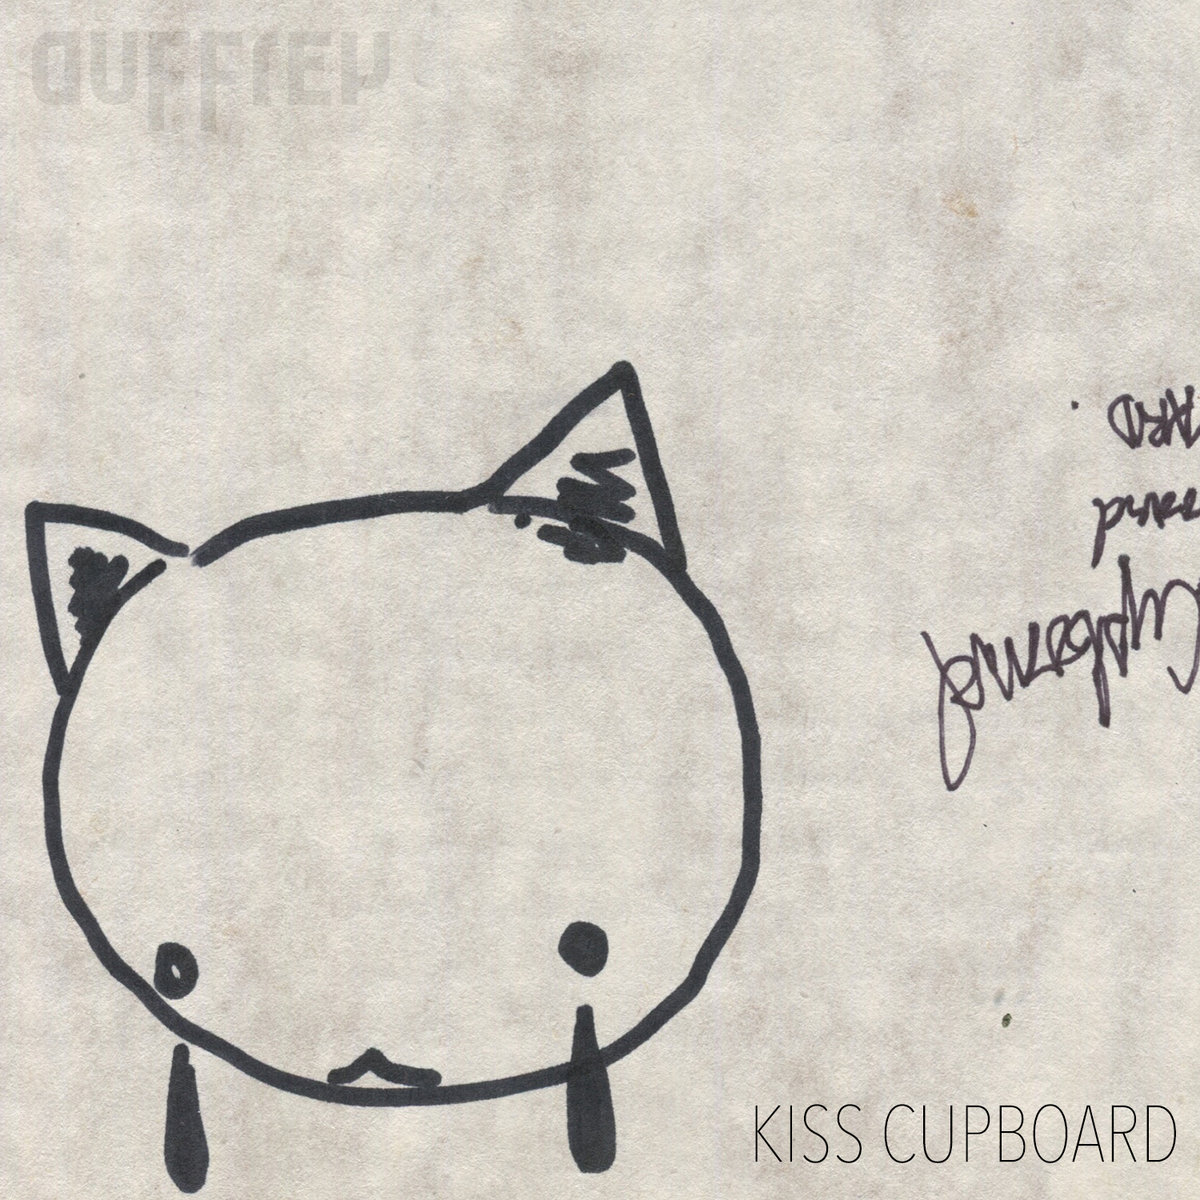 Duffrey - Molasses Jacuzzi @ 'Kiss Cupboard' album (bass, electronic)